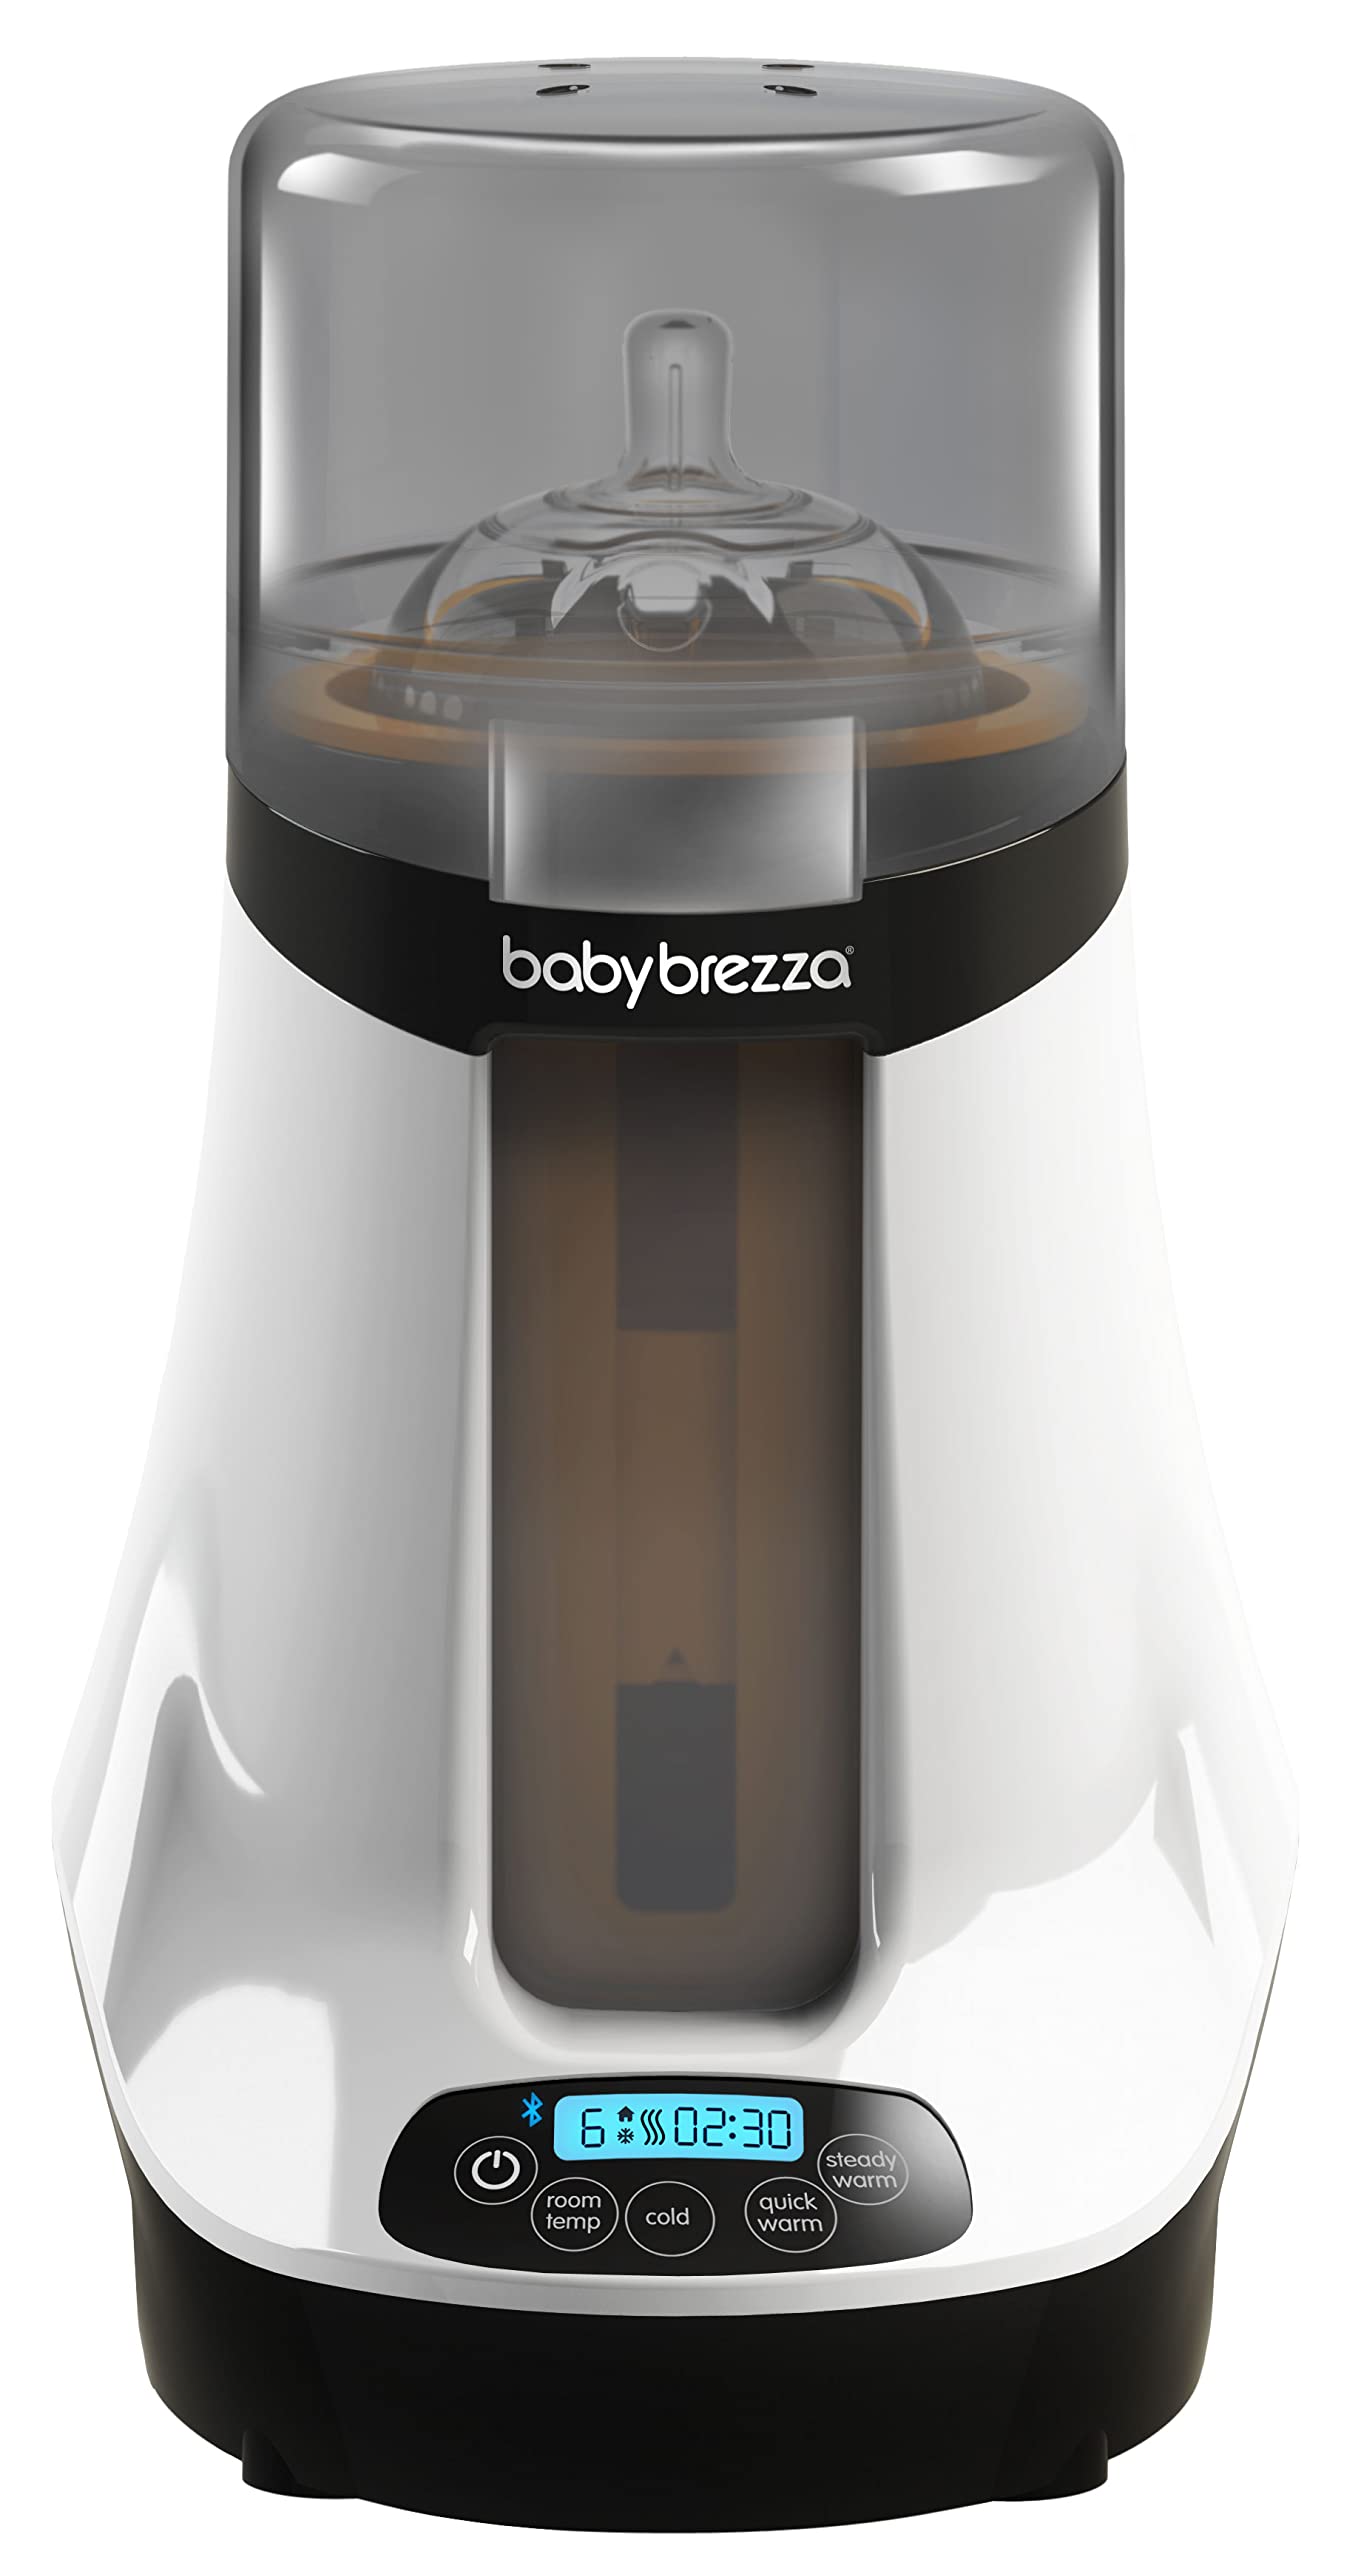 Baby Brezza Safe & Smart Electric Baby Bottle Warmer, Breastmilk Warmer + Baby Food Warmer + Defroster - Universal Warmer Fits All Feeding Bottles: Glass + Plastic – Wireless Bluetooth Control